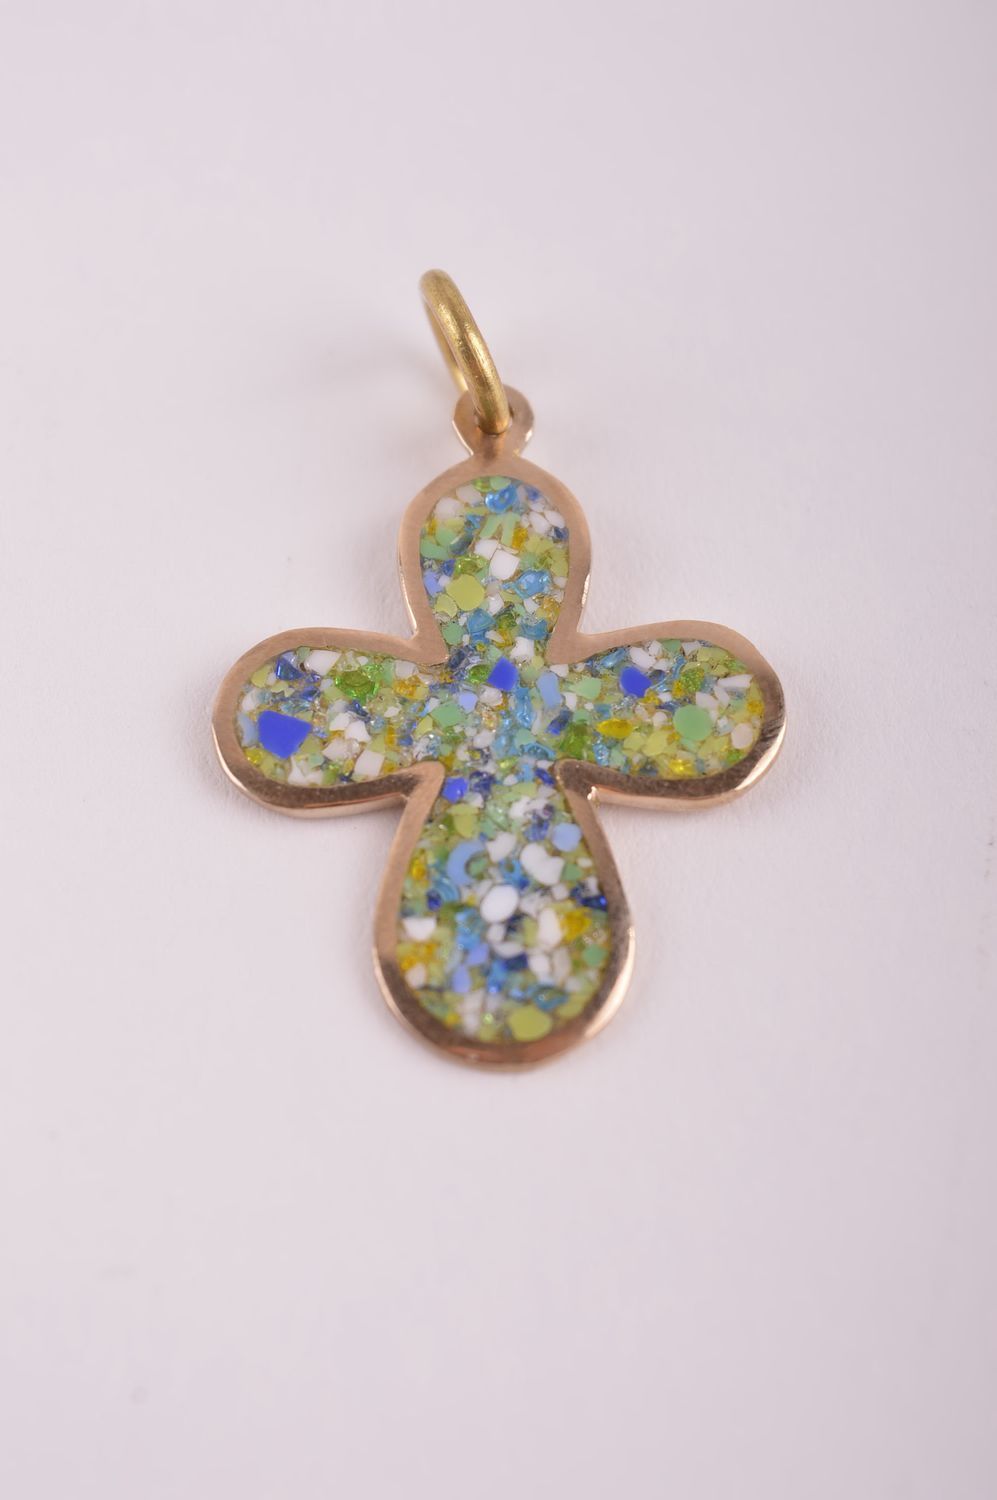 Stylish handmade metal cross pendant with natural stones gemstone pendant photo 2